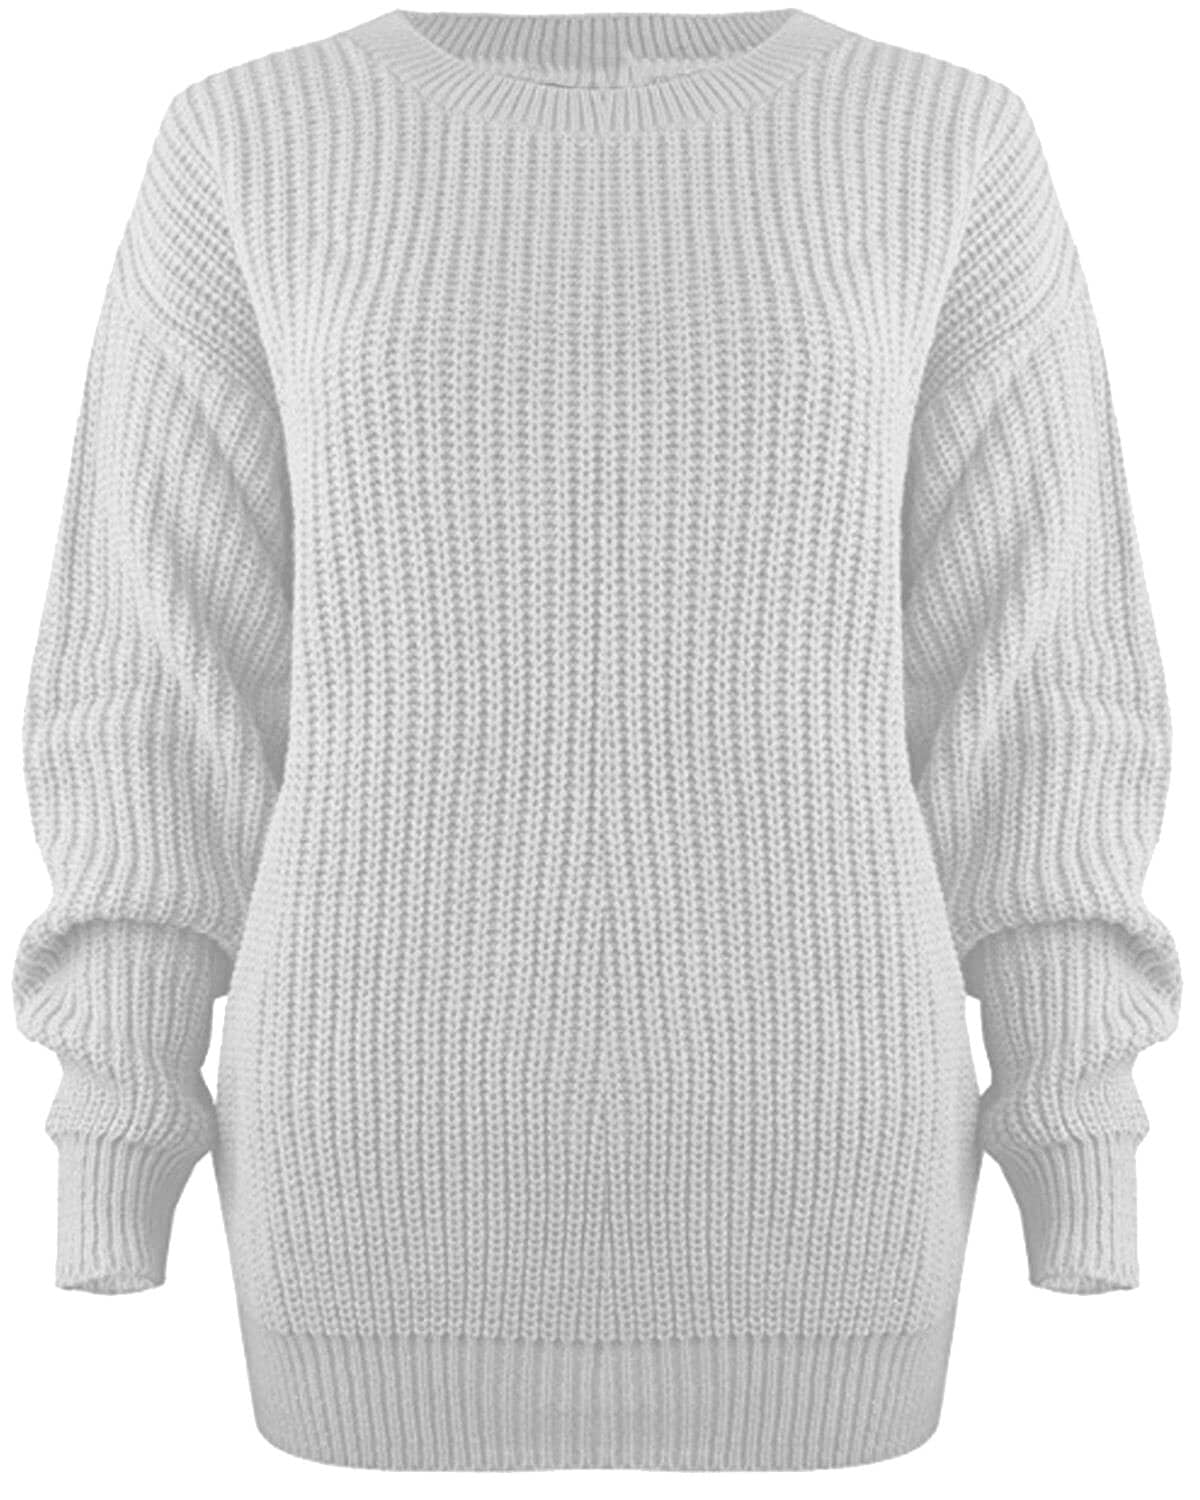 Womens Knit Fishernet Plain Causal Long Sleeve Top Sweater - Etsy UK